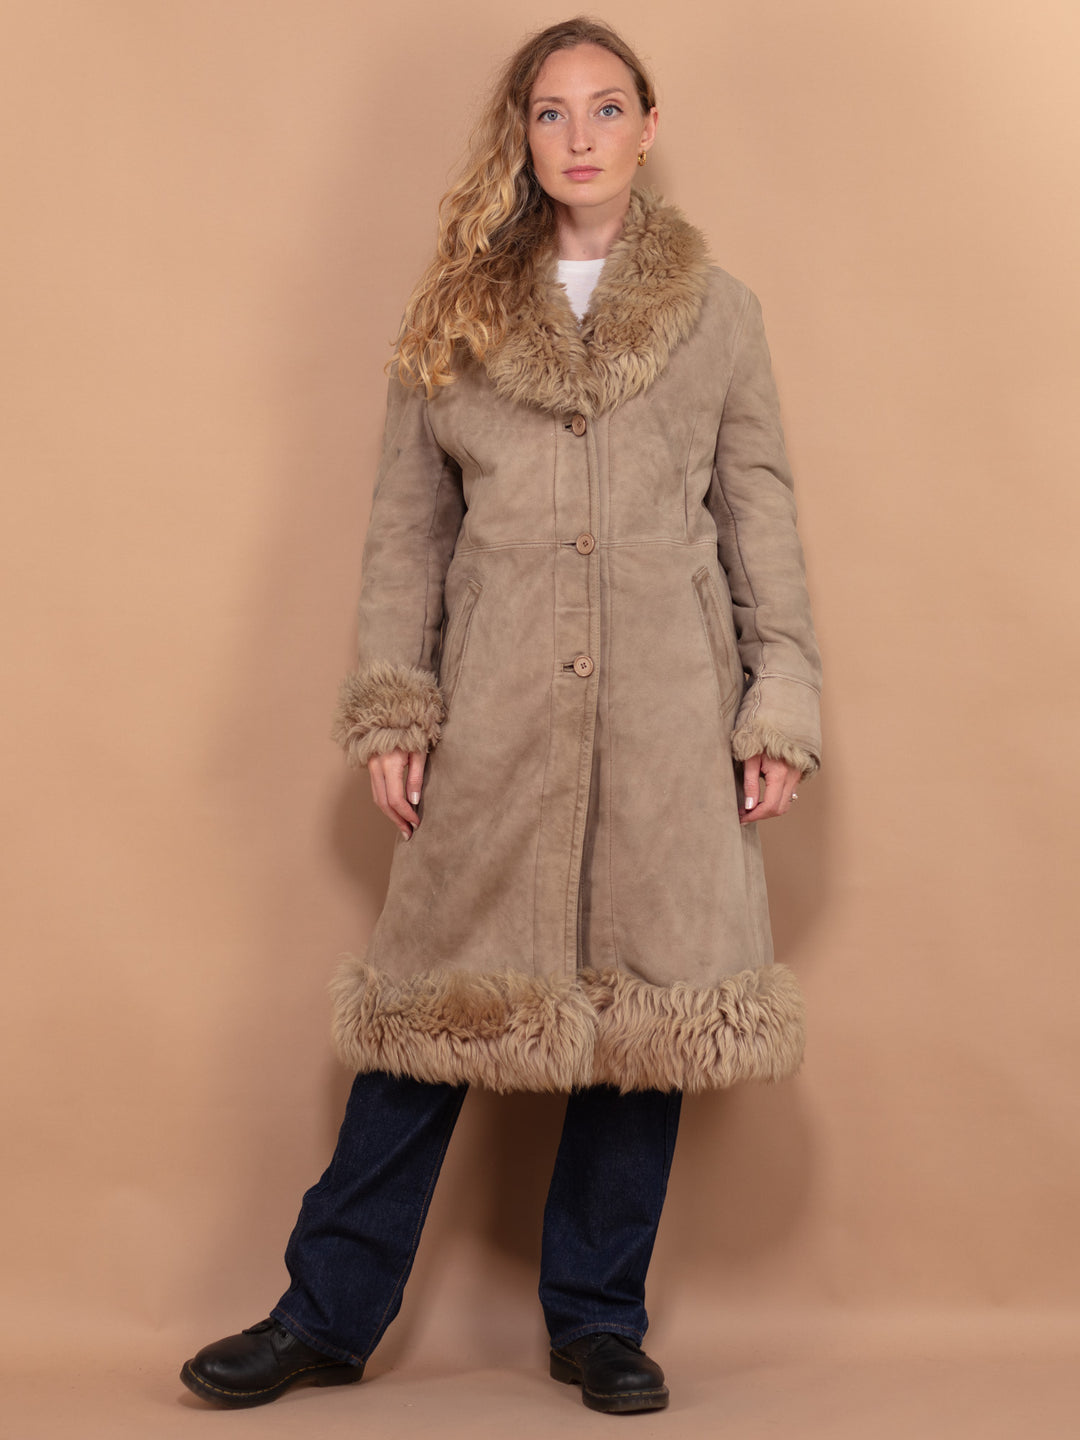 Penny Lane Sheepskin Coat 70s, Size S Small, Shearling Suede Coat, Boho Style Sheepskin Overcoat, Vintage Outerwear, Sustainable Clothing